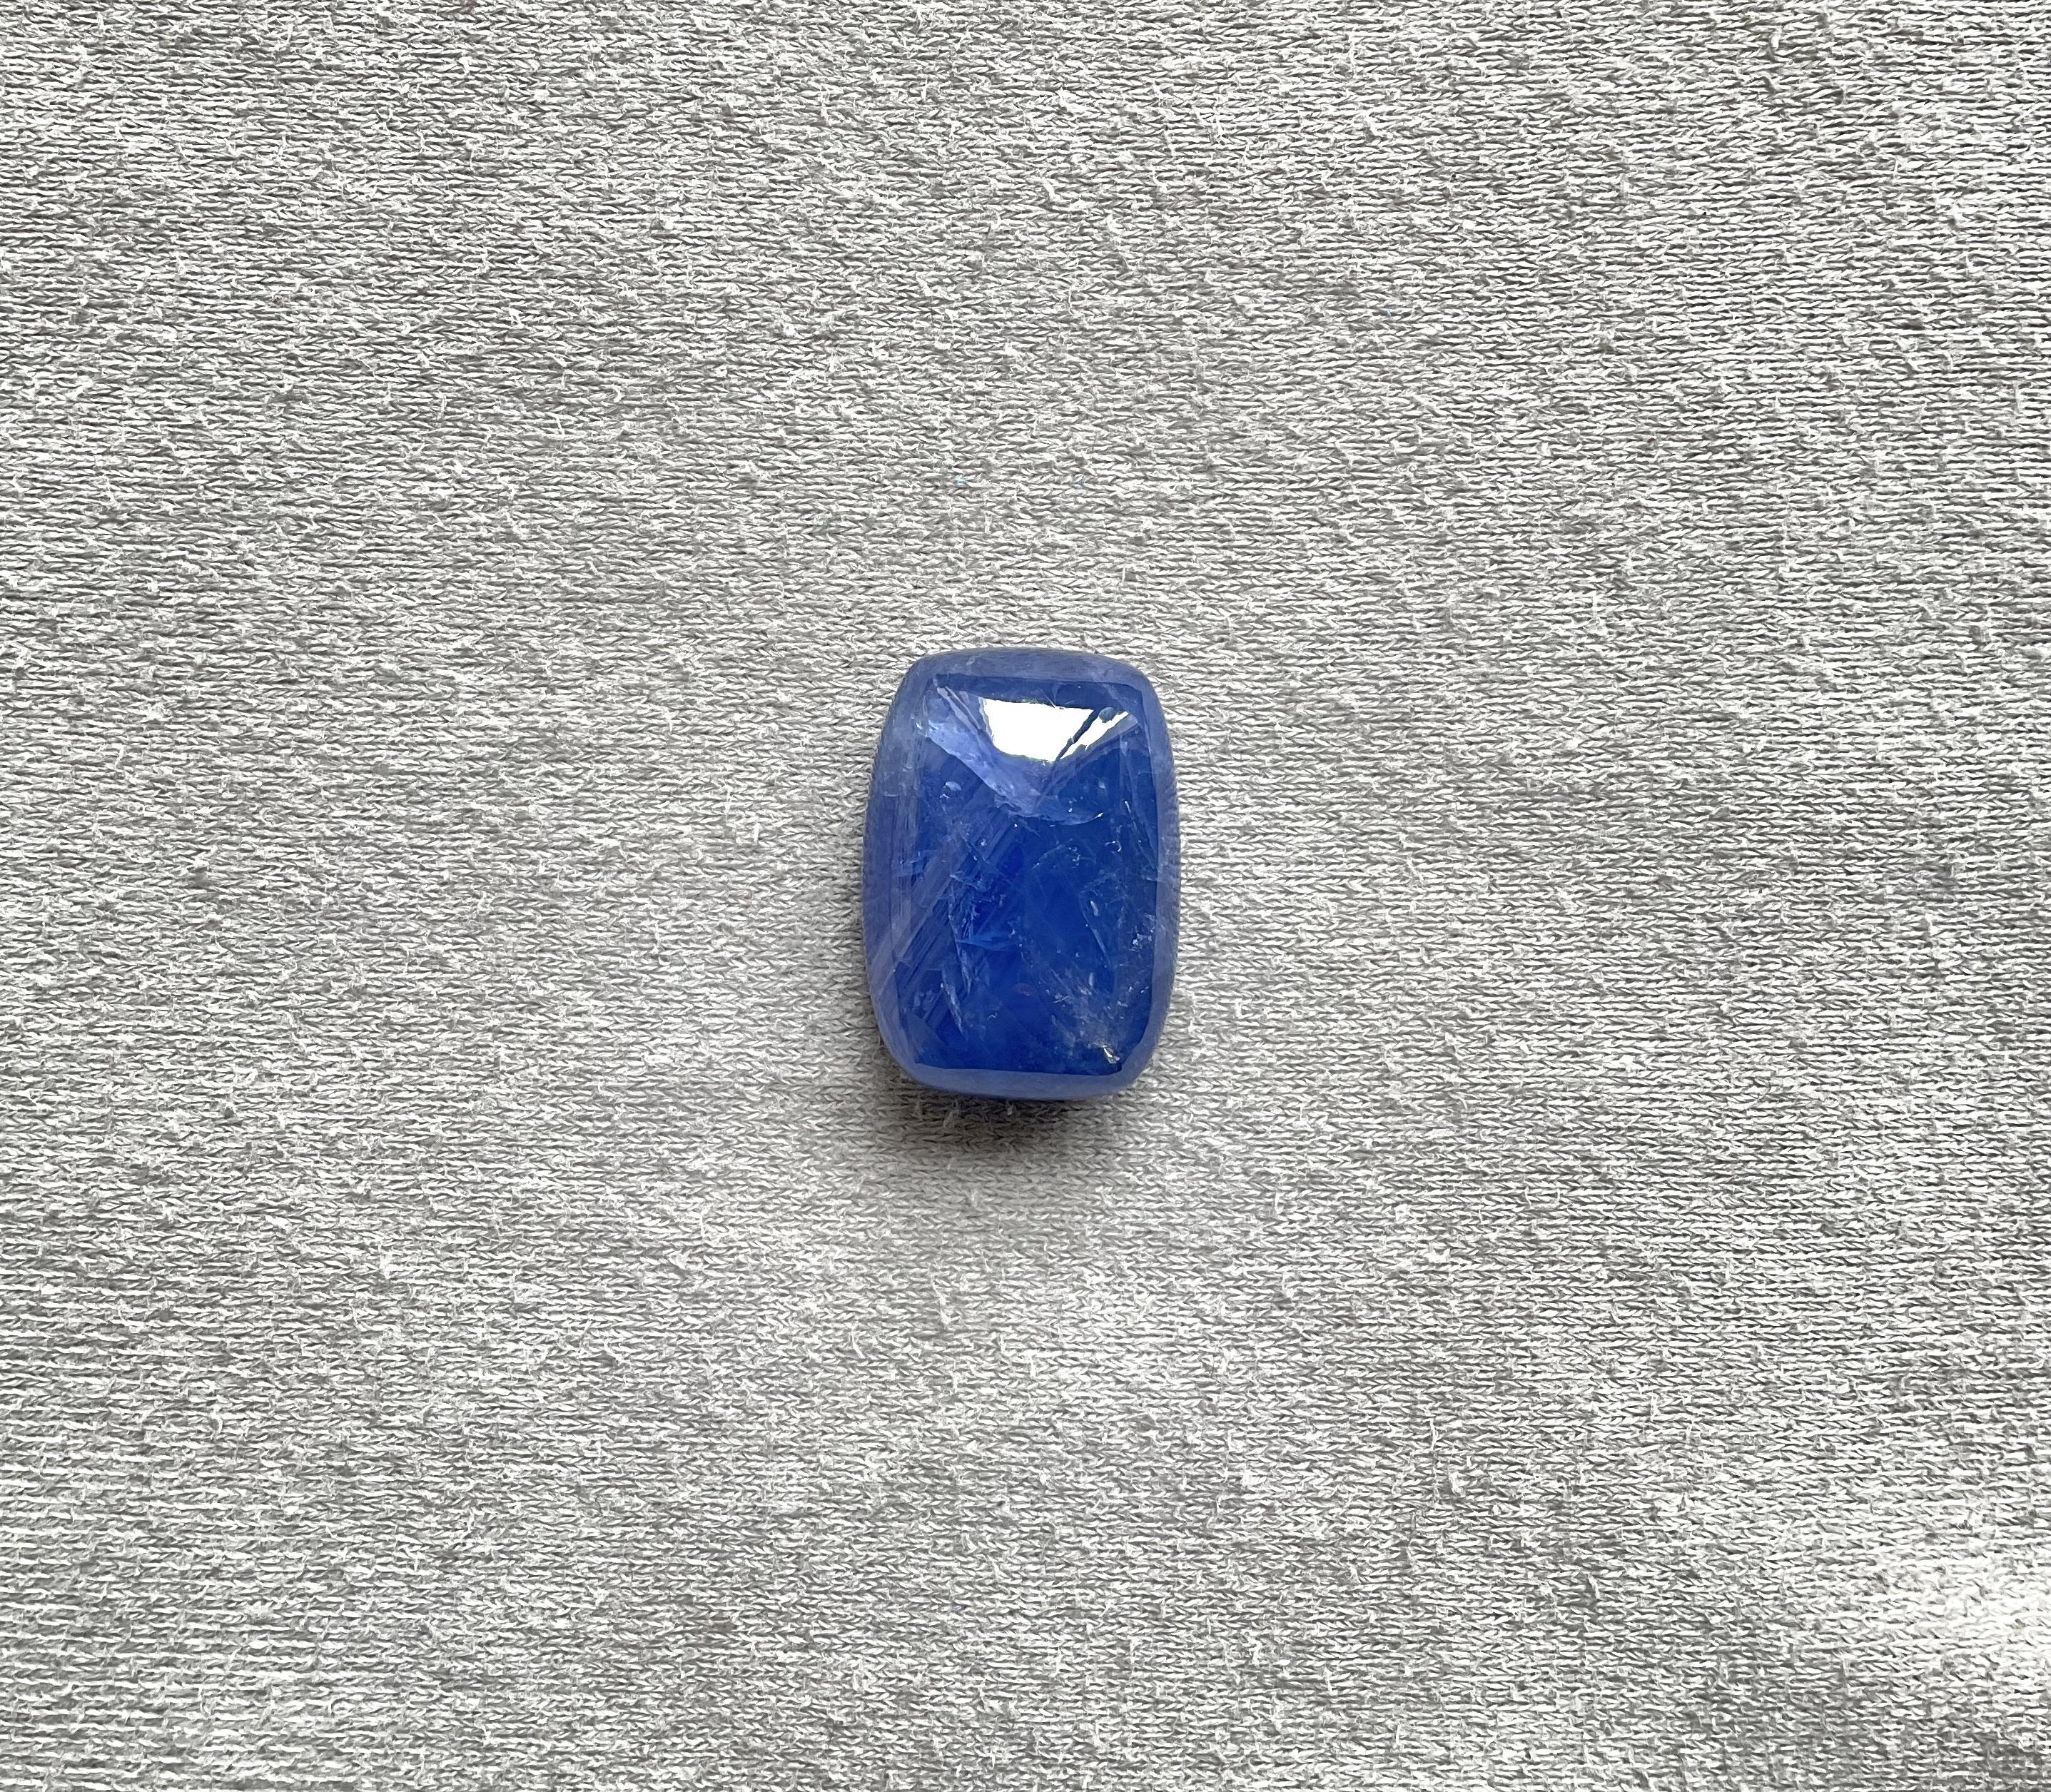 41.73 Carats Burmese Sapphire Cabochon Sugarloaf No-Heat Top Quality Natural Gem

Gemstone: Blue Sapphire
Shape: Sugarloaf Cabochon
Carat weight: 41.73
Size - 22.80x16 MM
Quantity - 1 piece